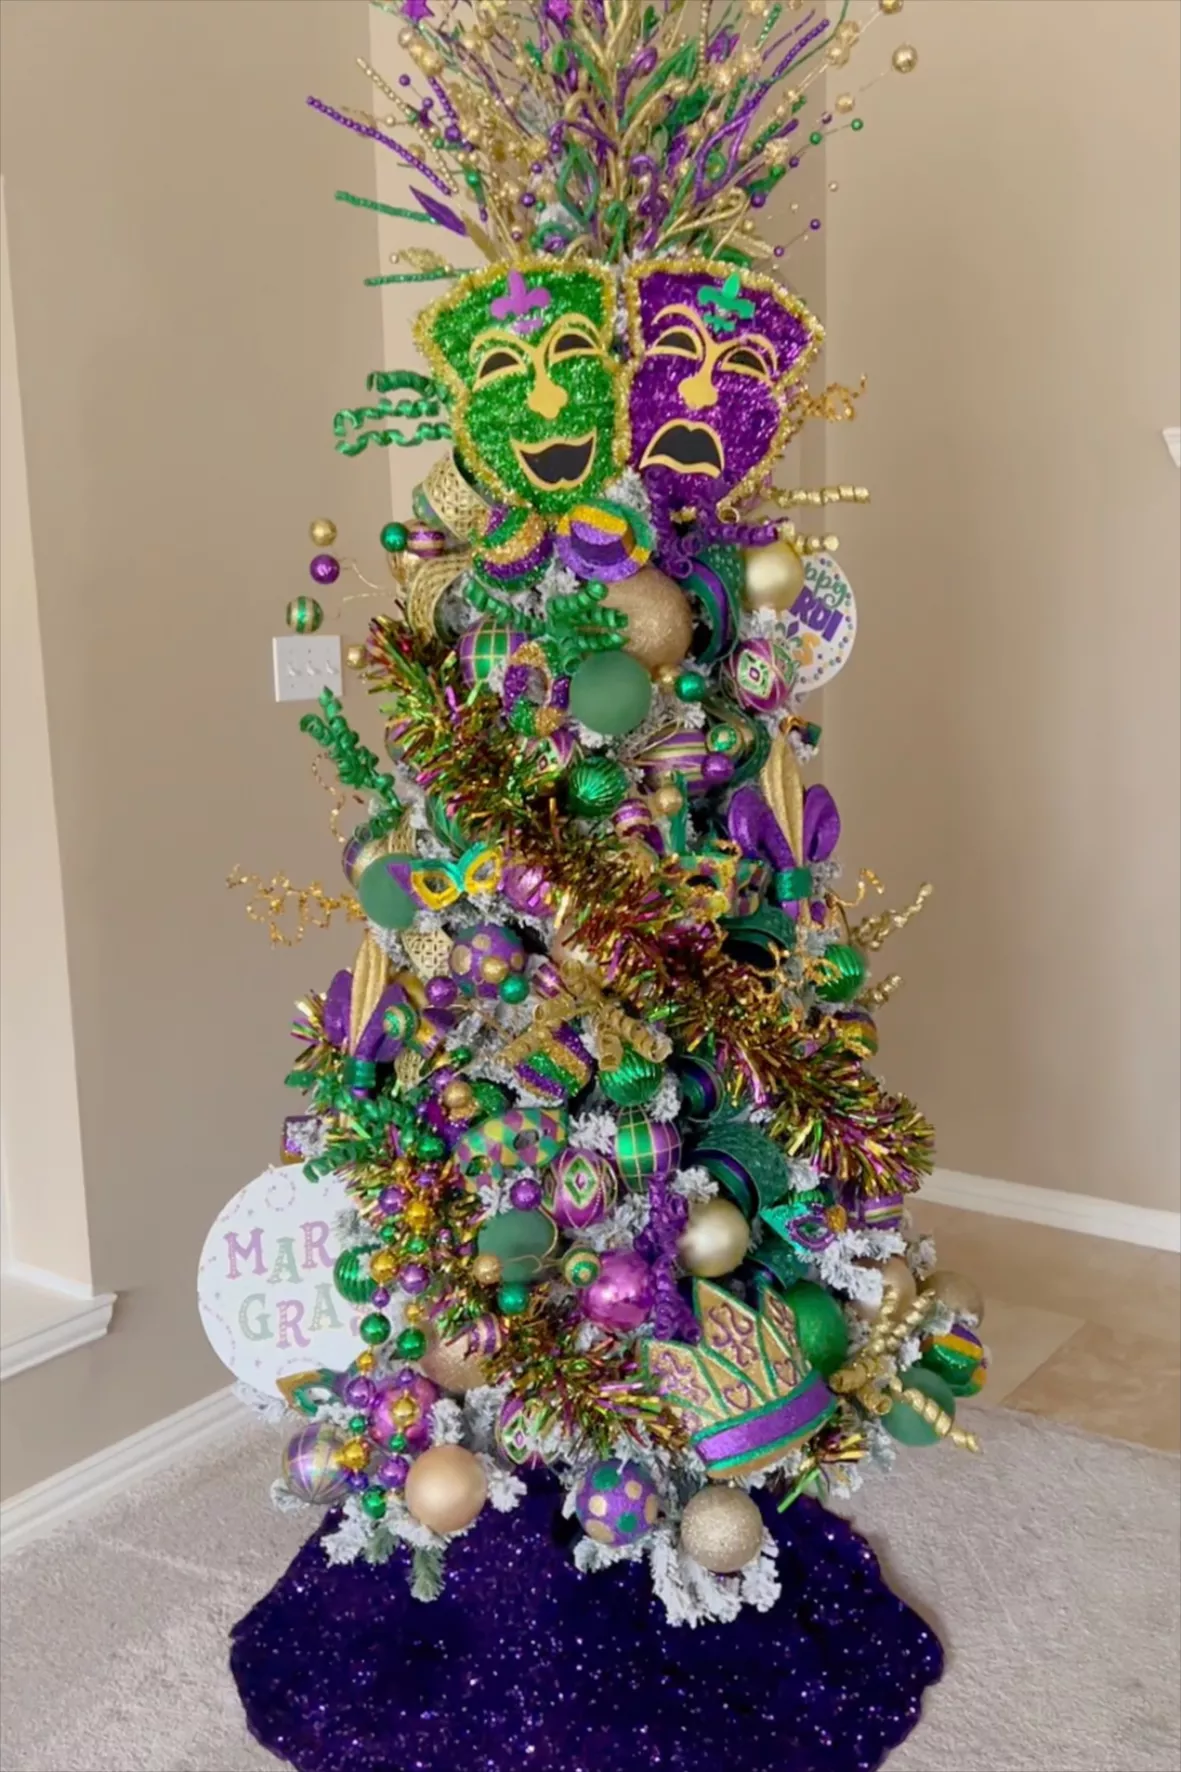 Turn that Christmas tree into a Mardi Gras tree